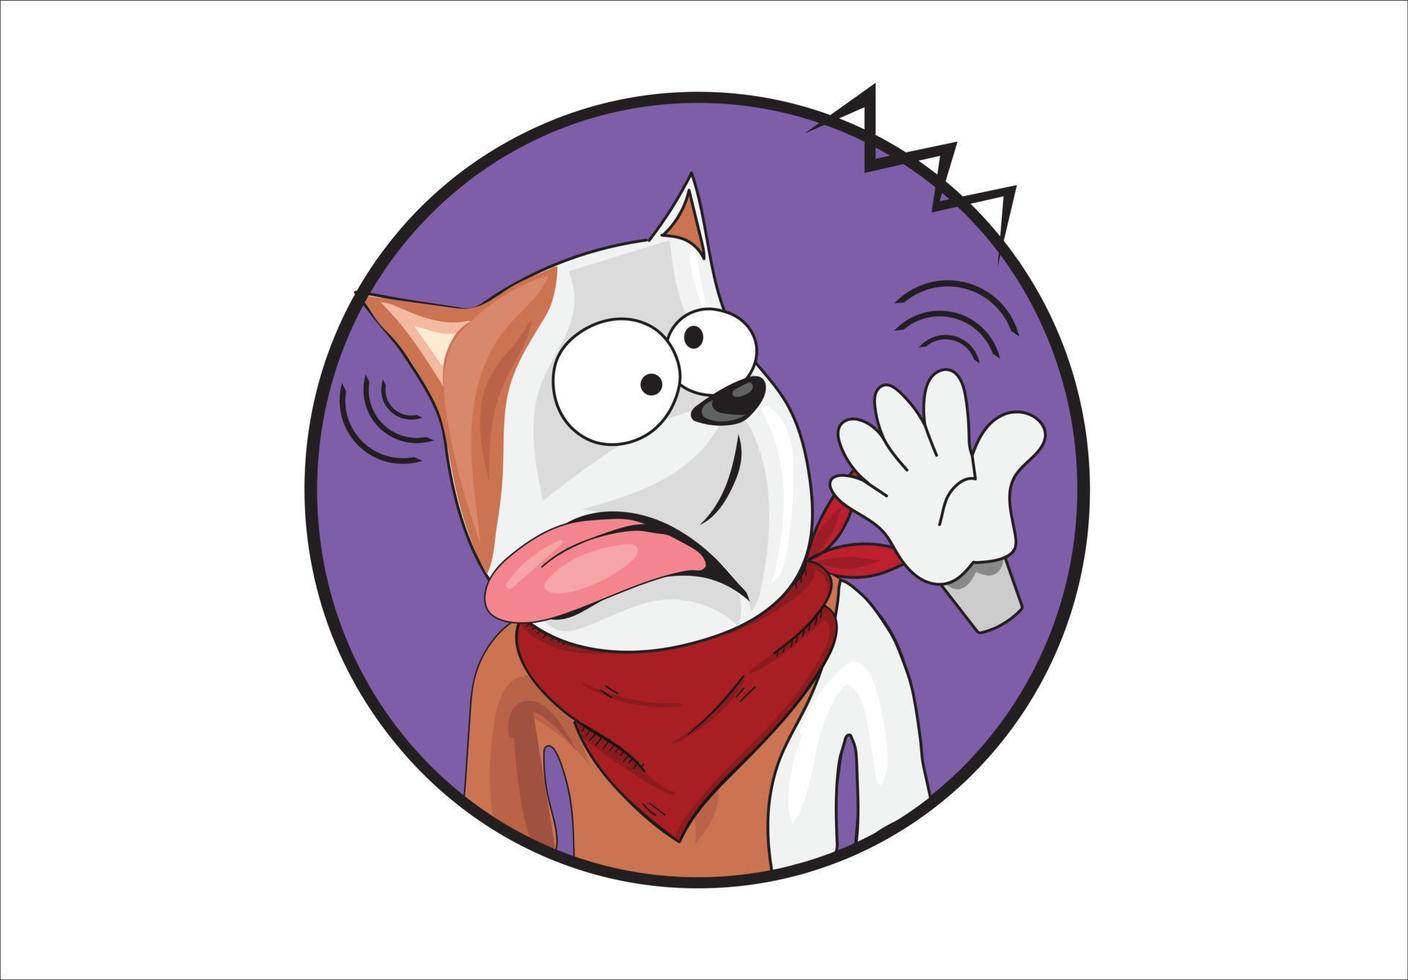 Dog cartoon face getting slapped illustration vector